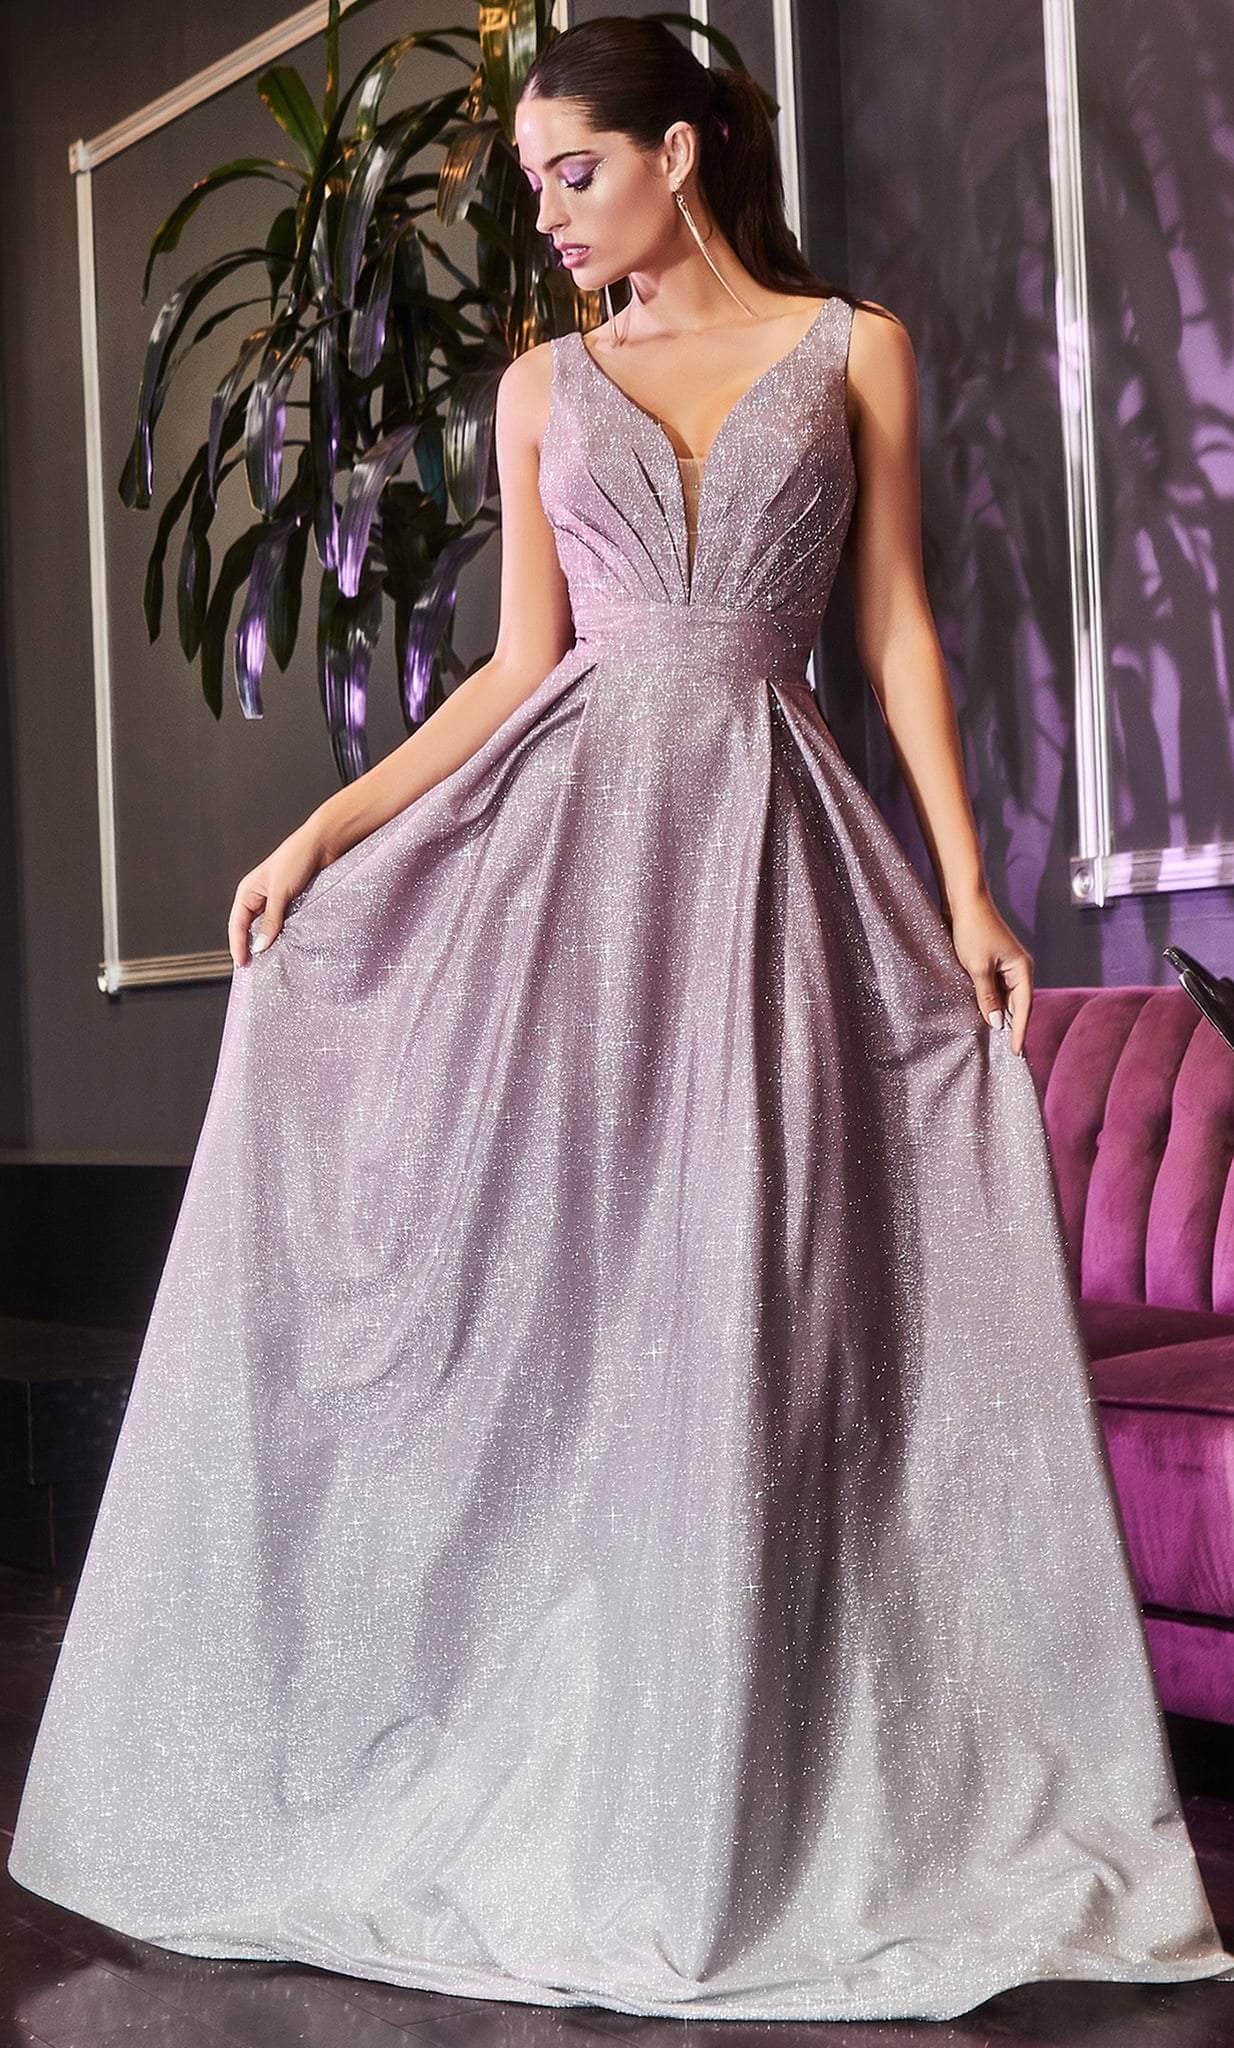 Ladivine 9174 - Glittered Gown